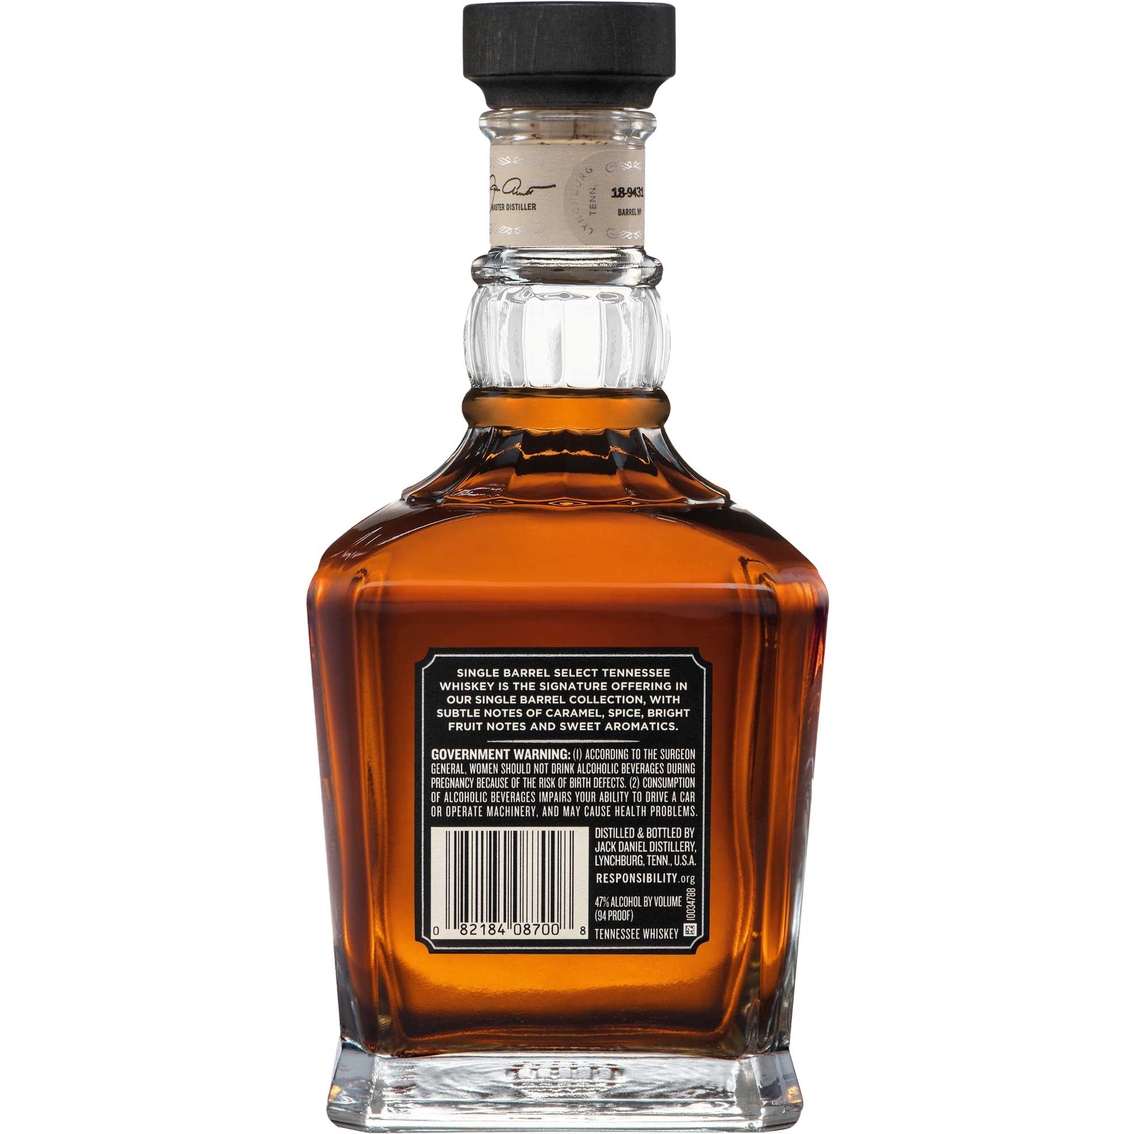 Jack Daniels Single Barrel Tennessee Whiskey 750ml - Image 2 of 2